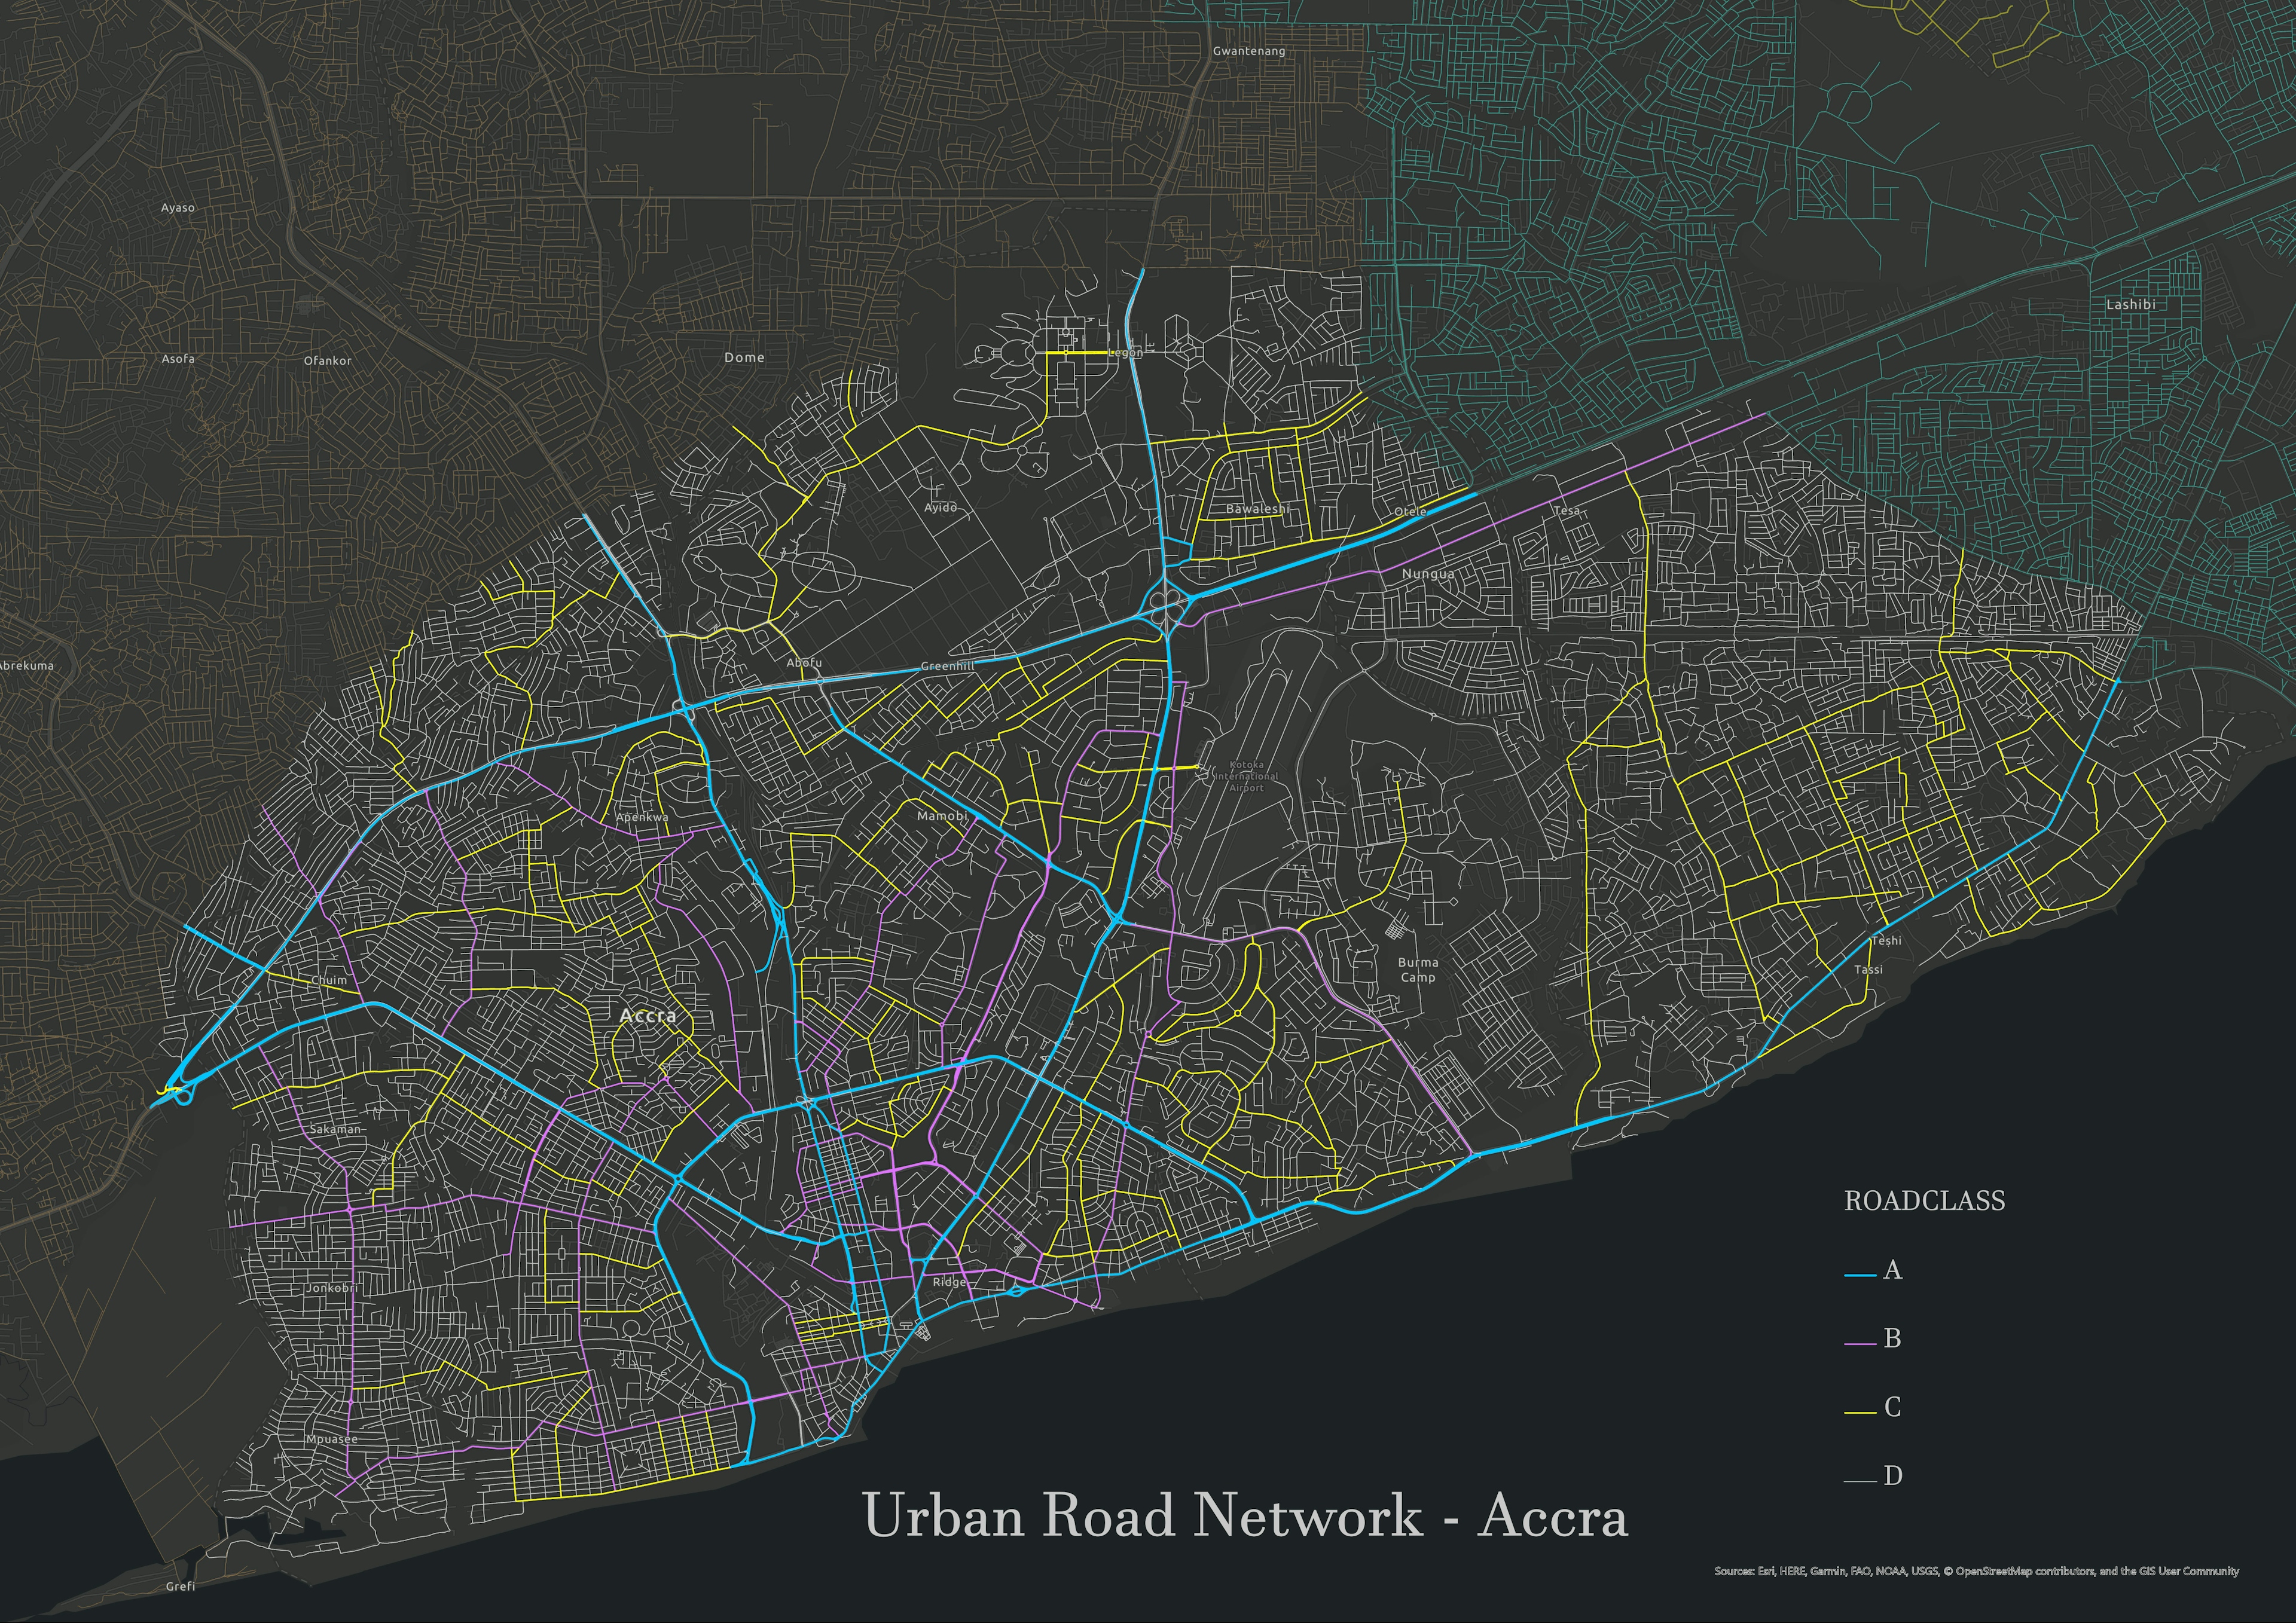 Road Network - Accra